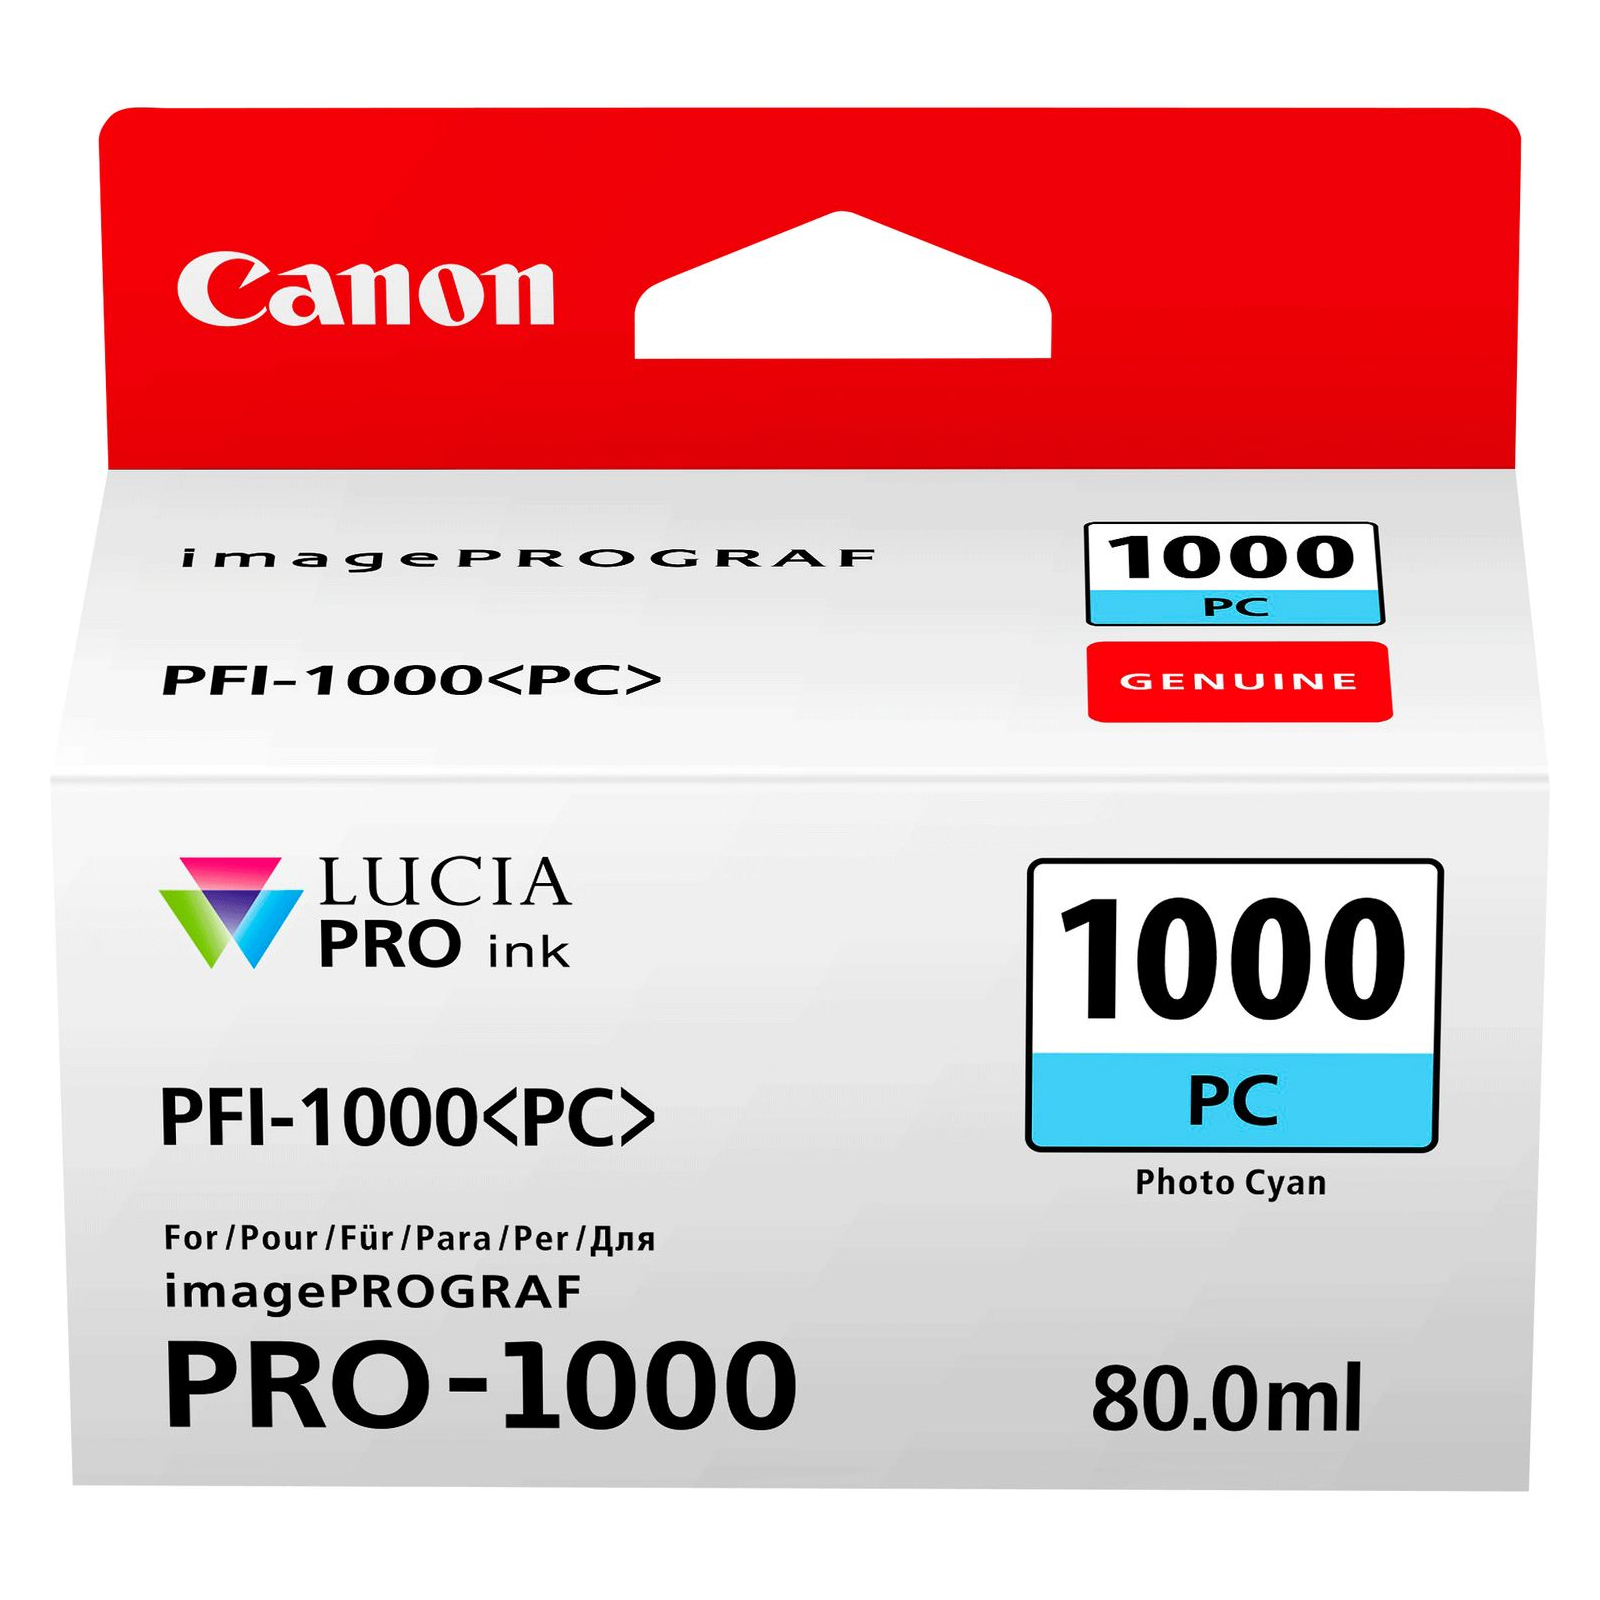 Картридж Canon PFI-1000PM (Photo Magenta) (0551C001)